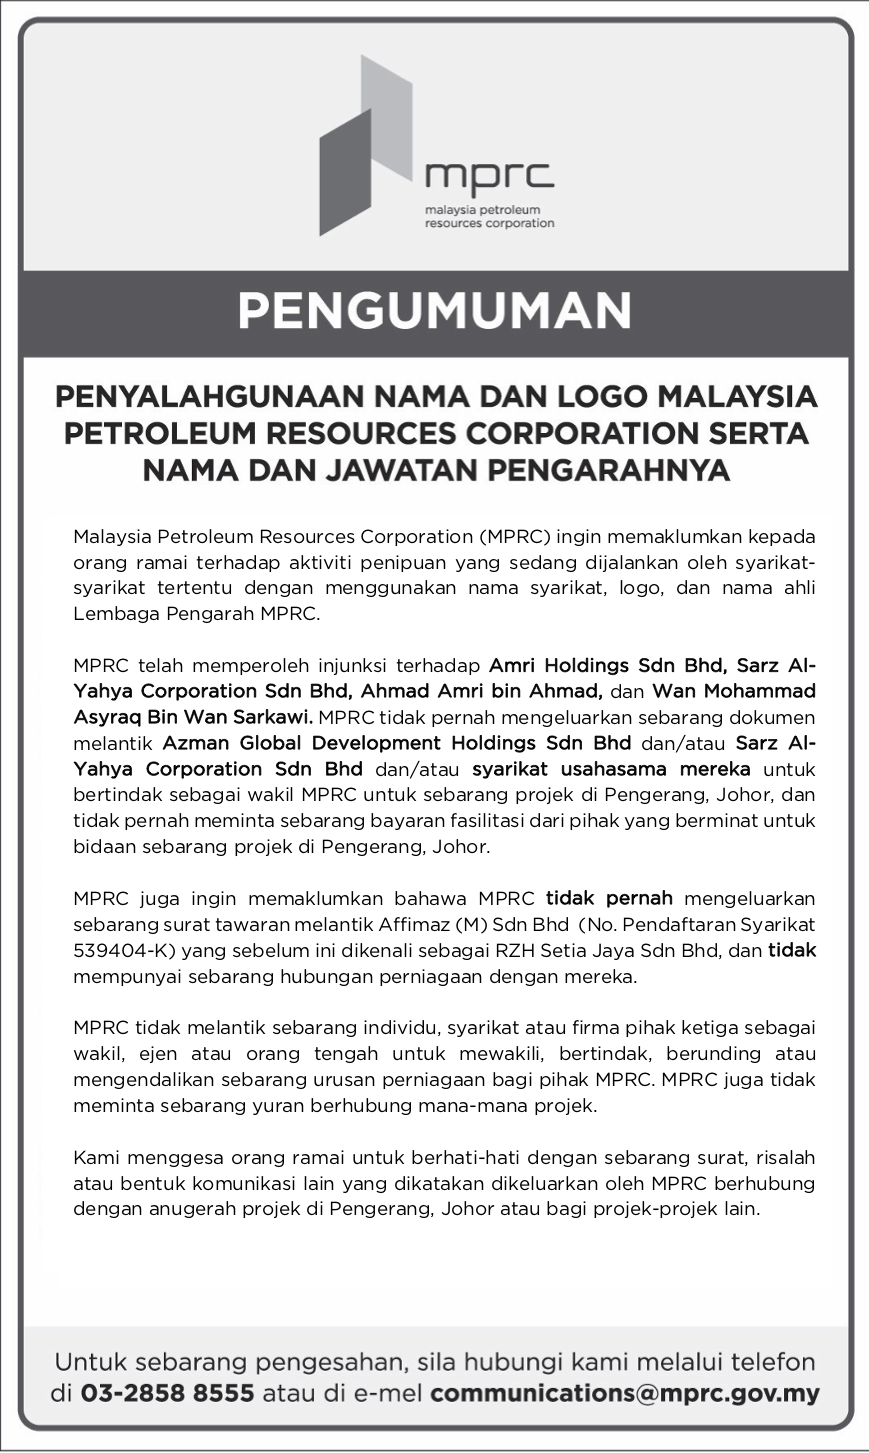 Petroleum resources corporation malaysia